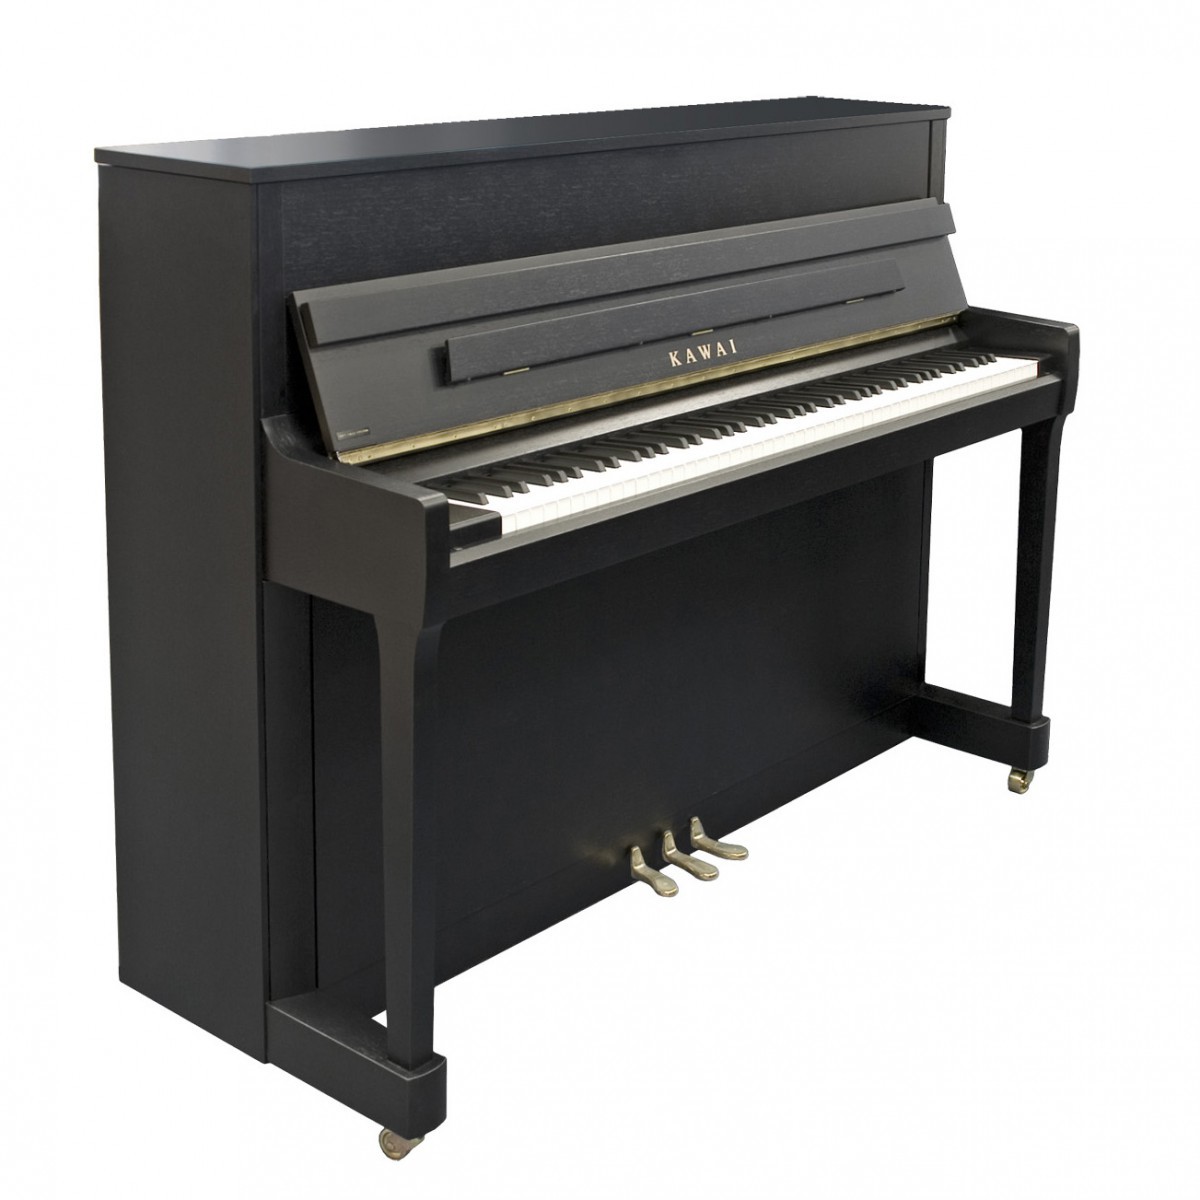 Kawai E-200 ATX3-L Klavier schwarz